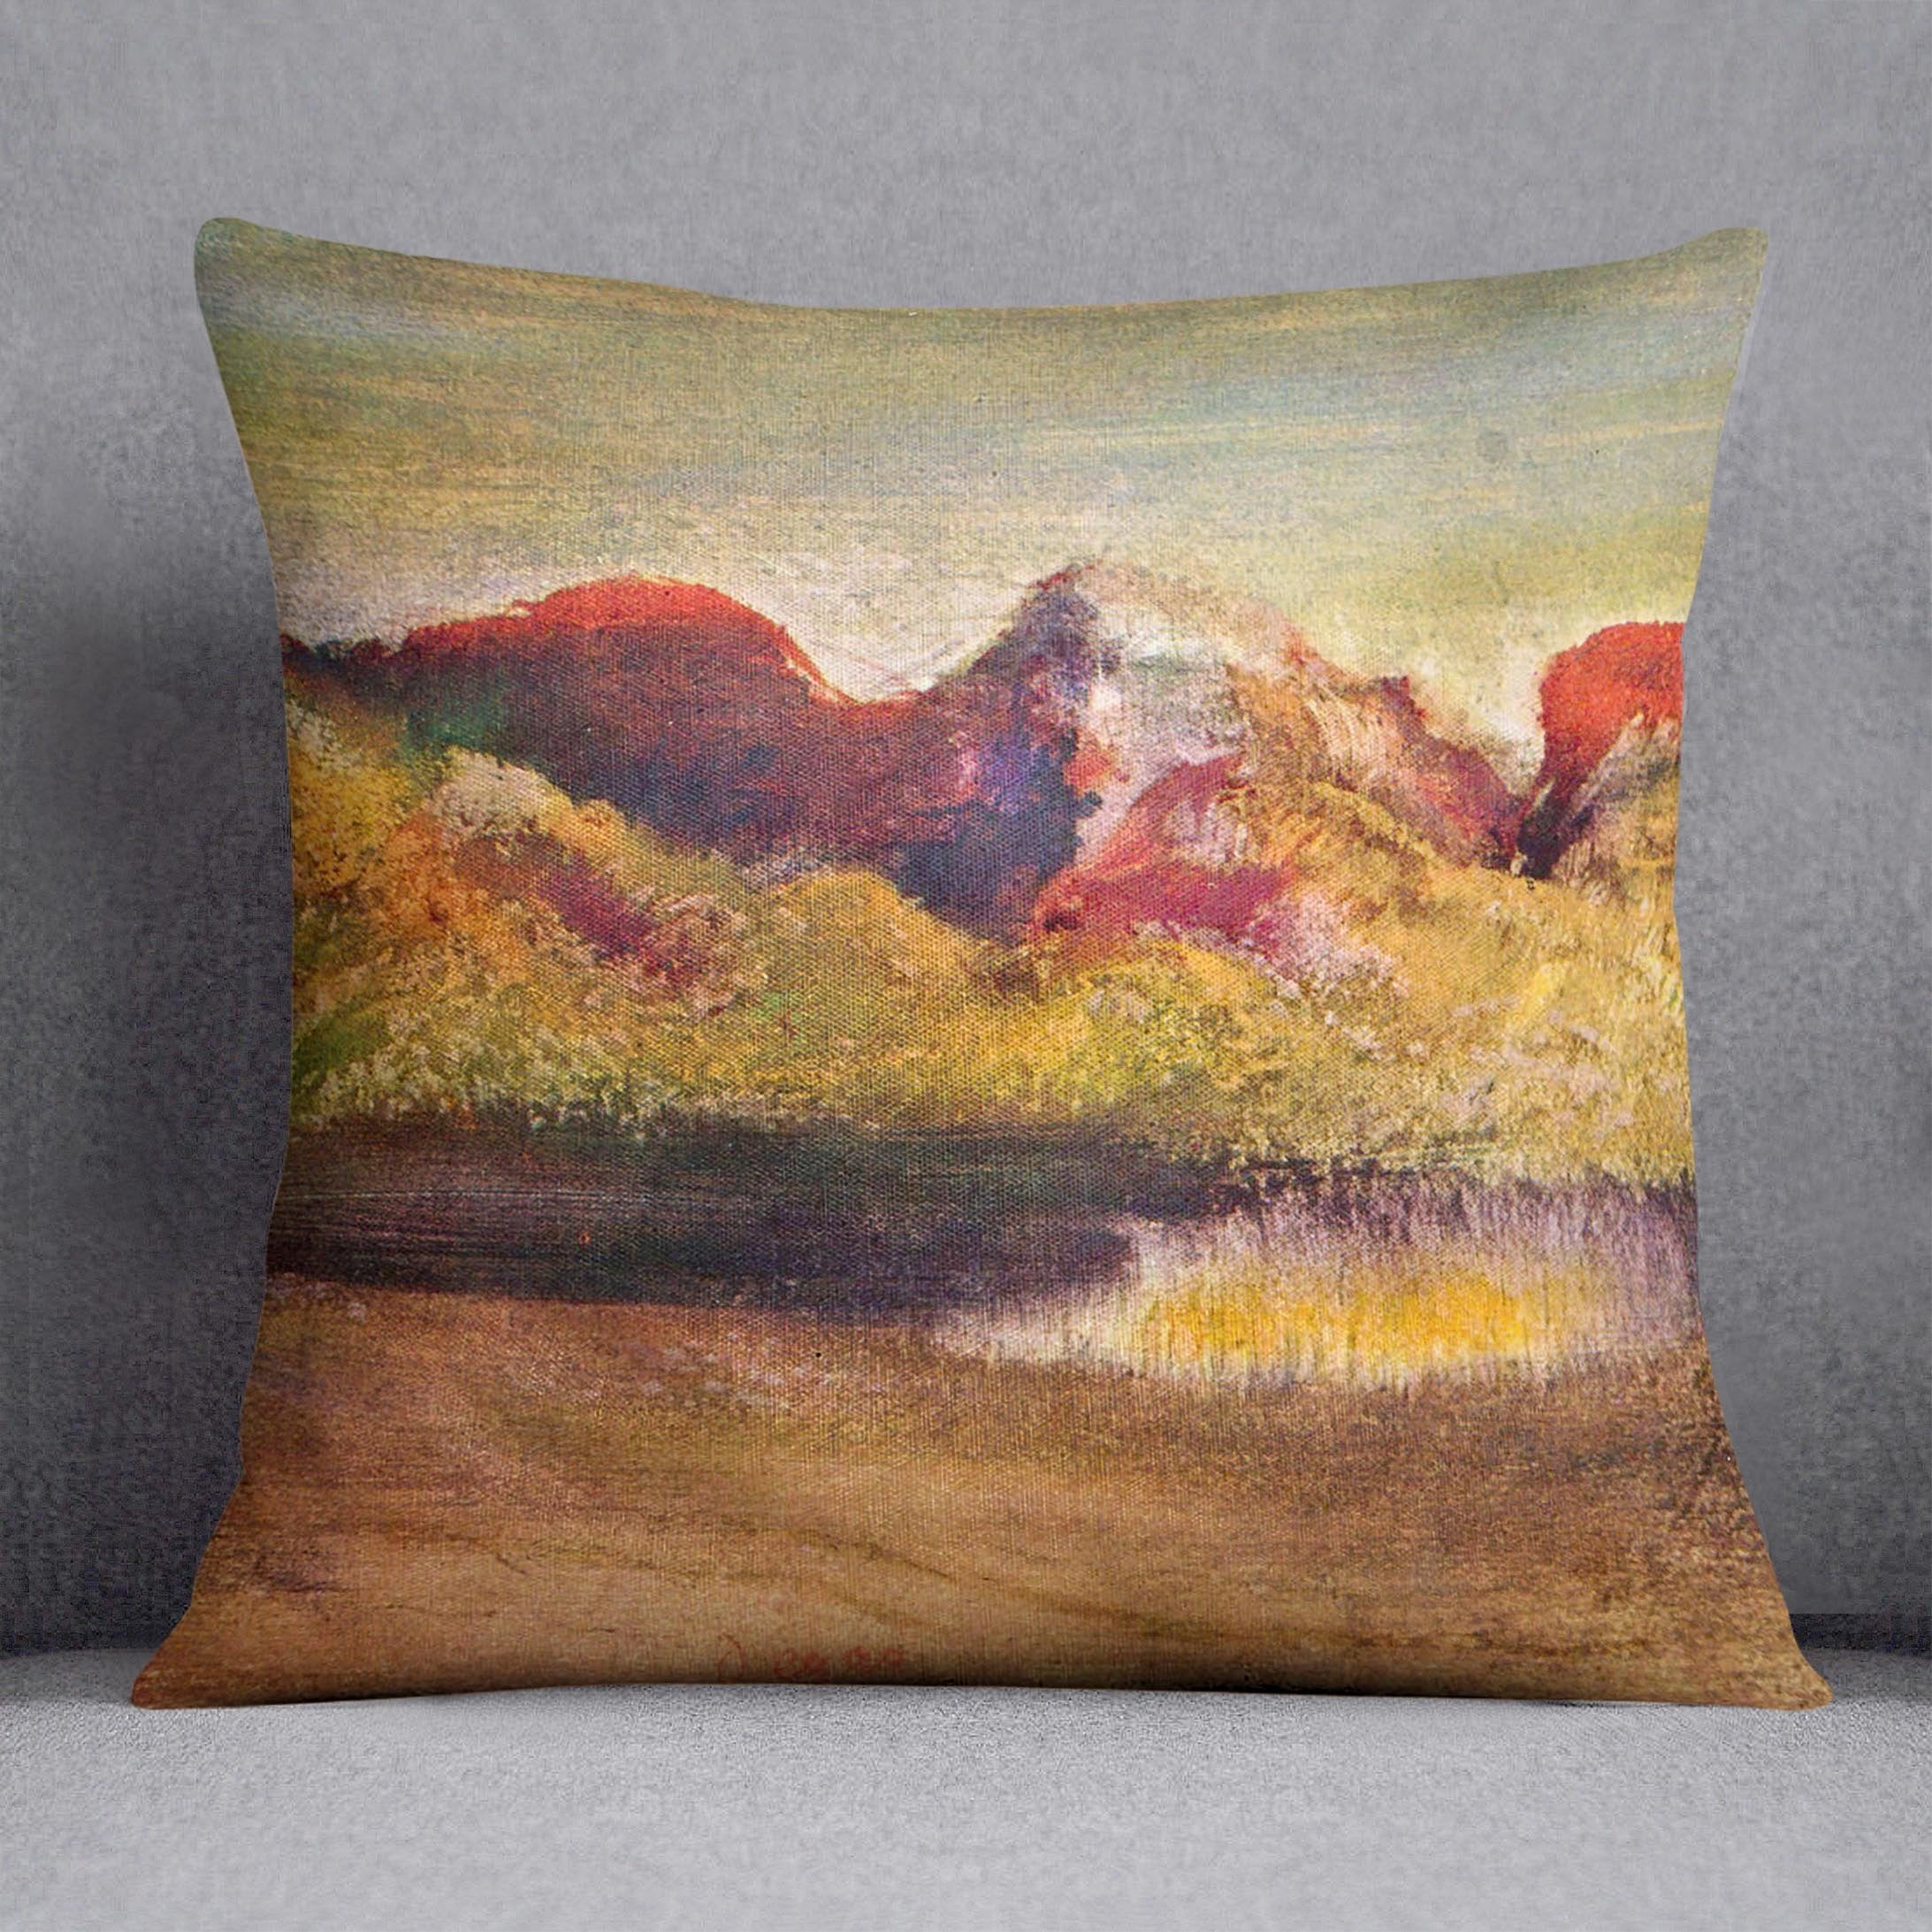 Lake and mountains by Degas Cushion